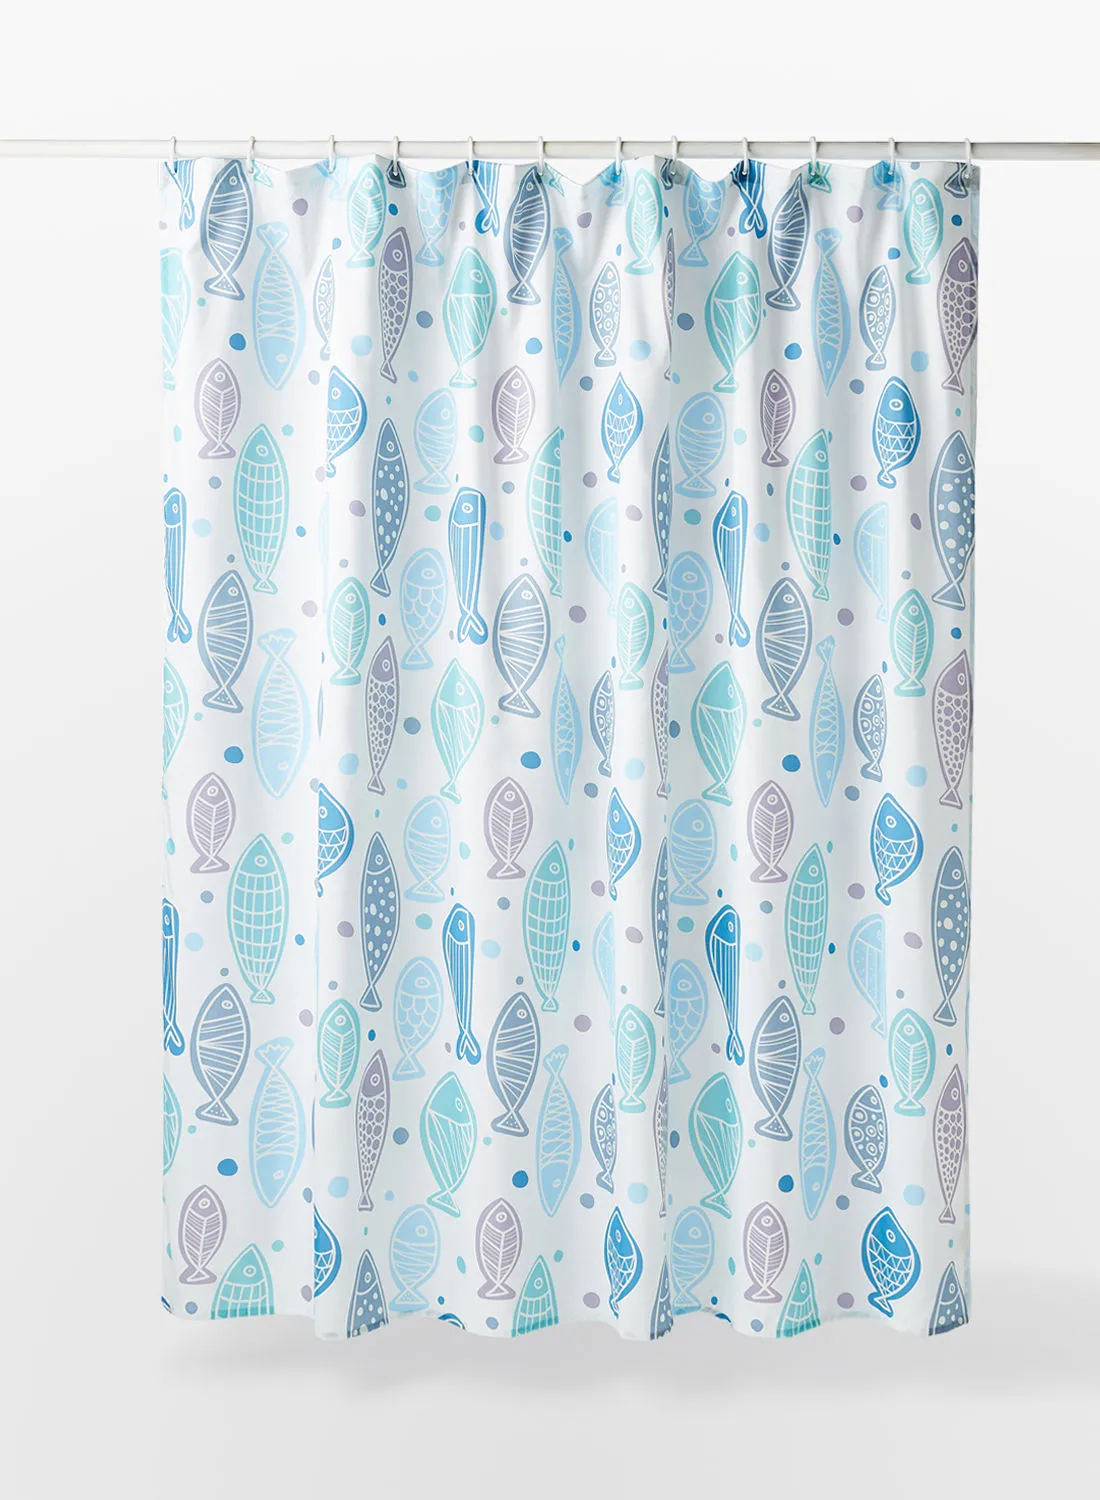 Bebi Printed Shower Curtain With Rings - Aqua 180 x 180cm